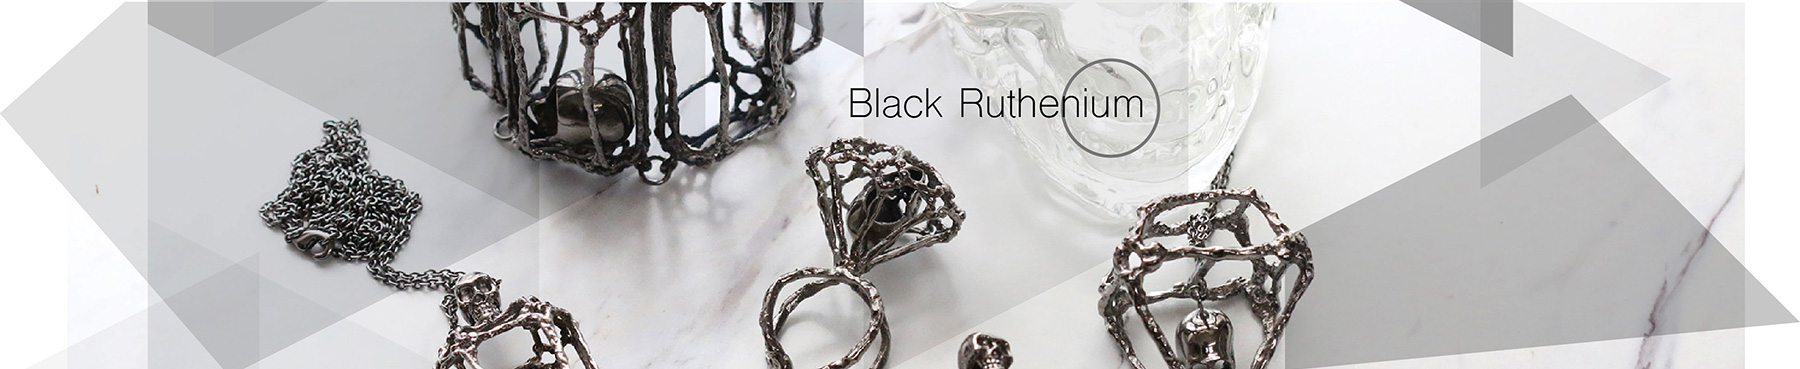 Black-Ruthenium-Banner-02_high